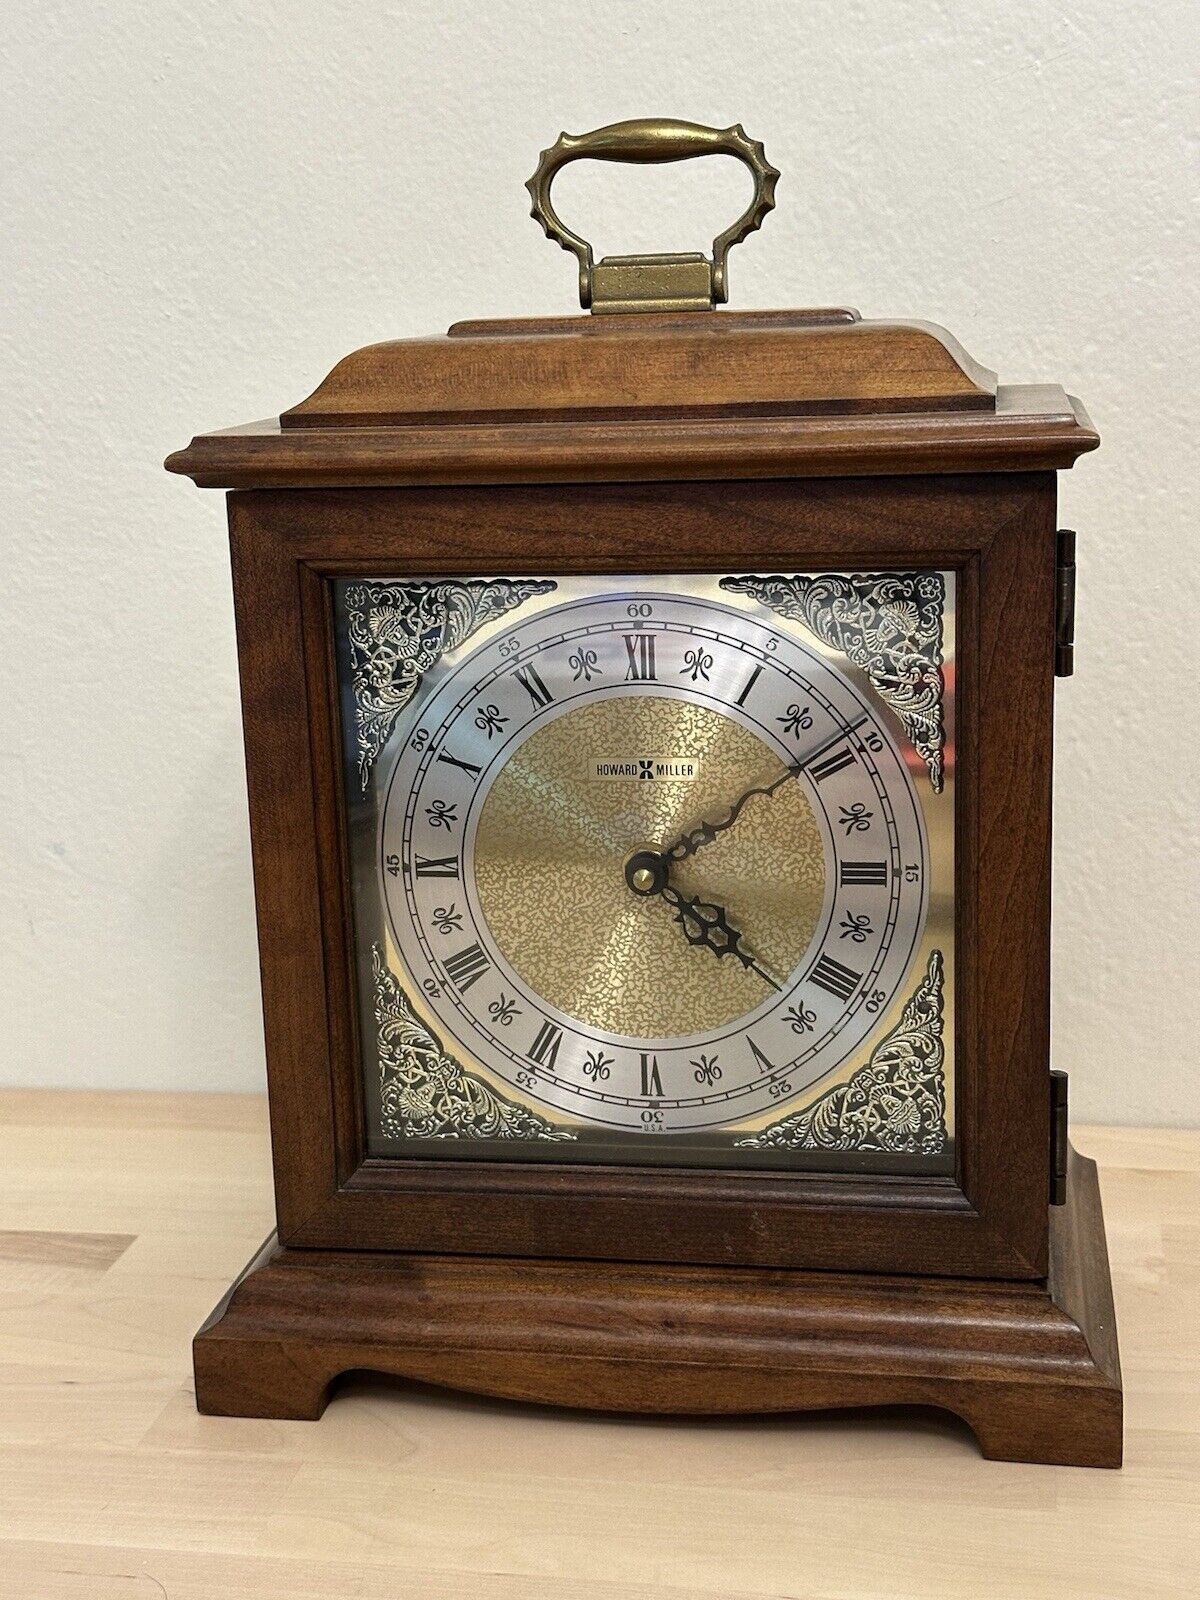 Vintage Mantle Clock With Chime Howard Miller Model 612-588 Mantle Chime Clock